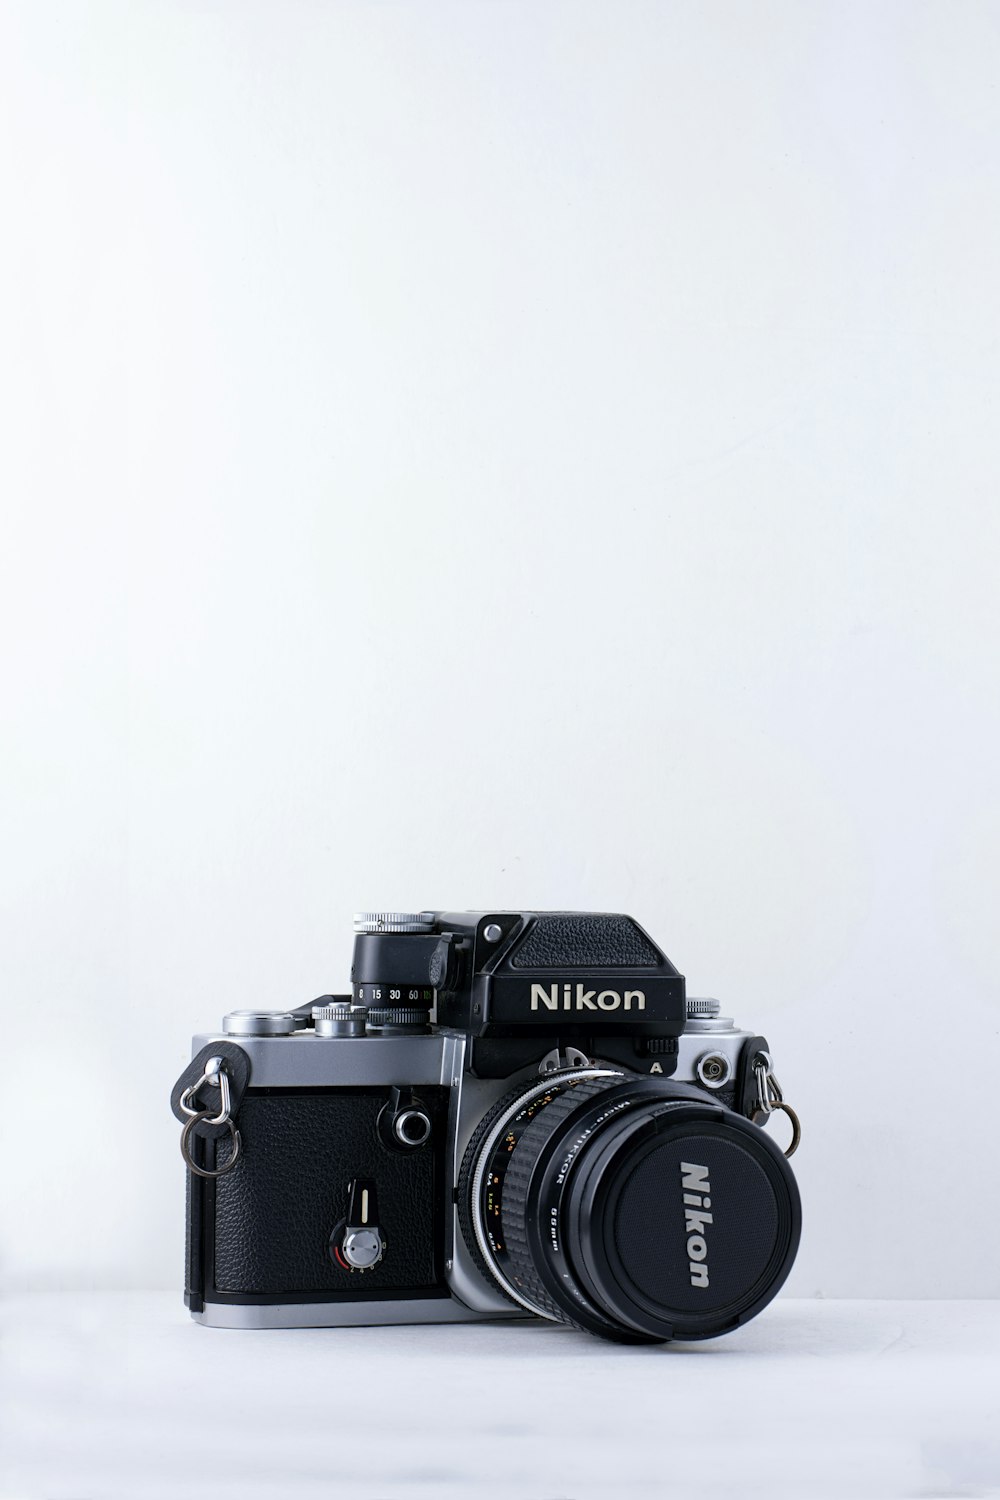 black Nikon camera against white background